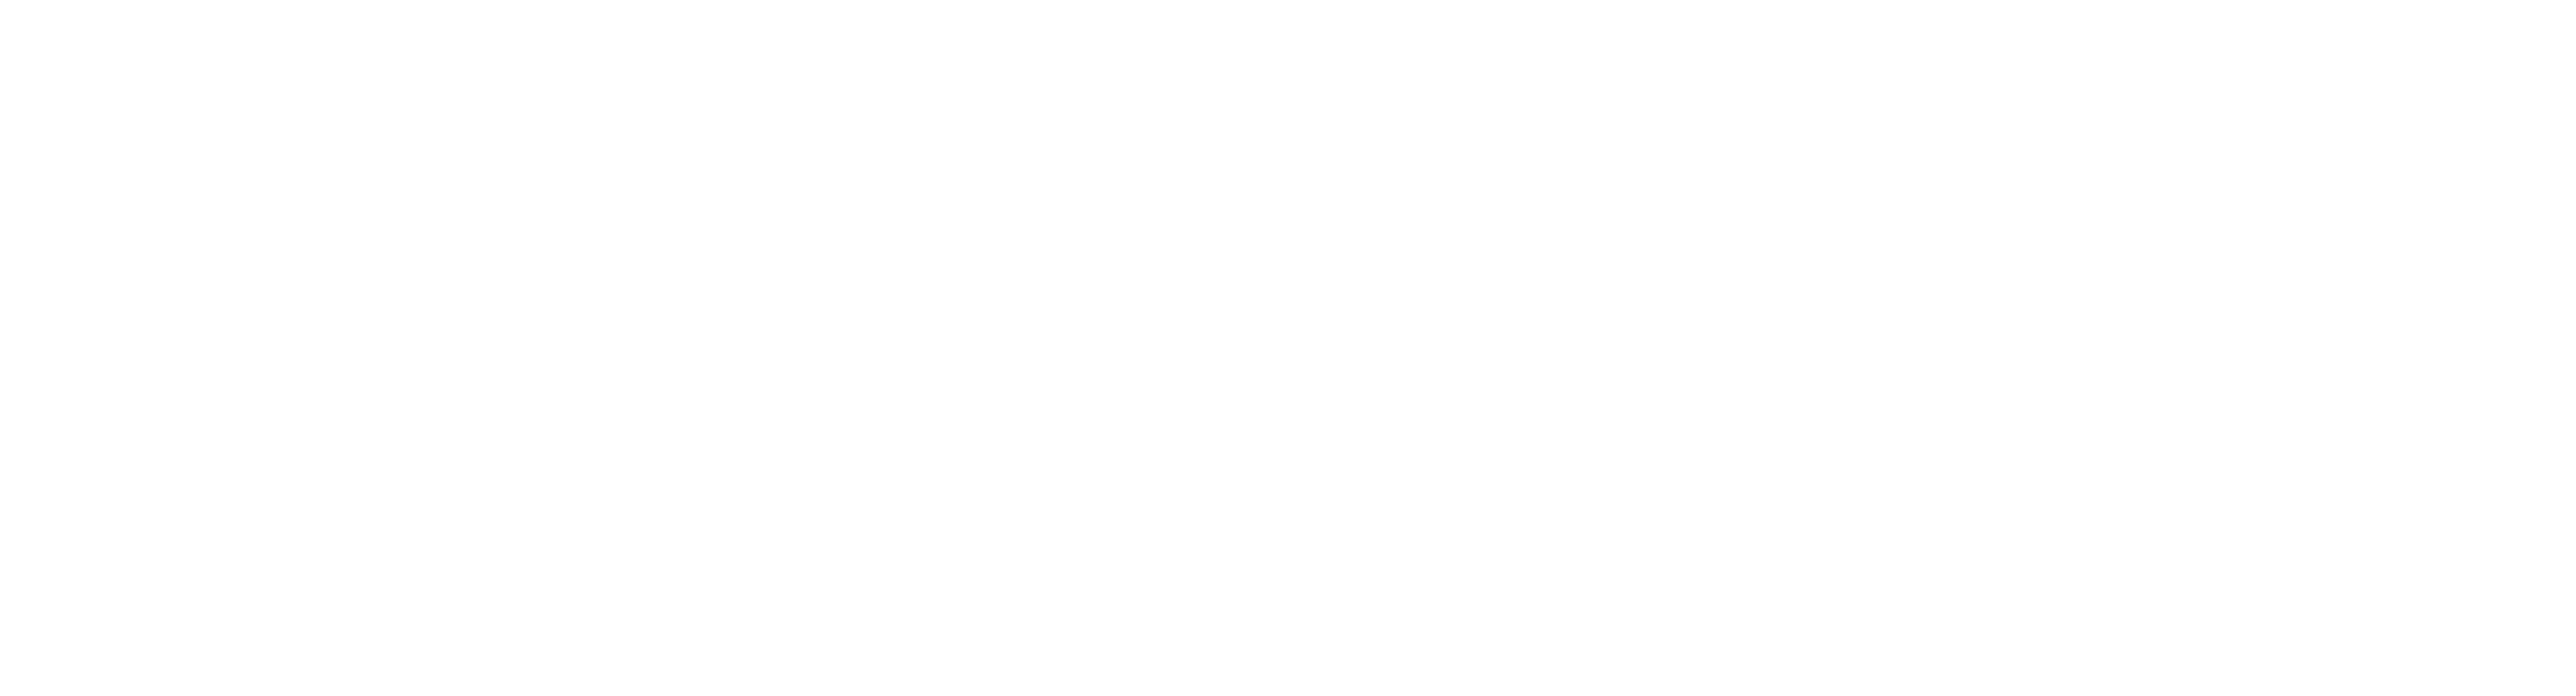 Sysnet is now VikingCloud logo